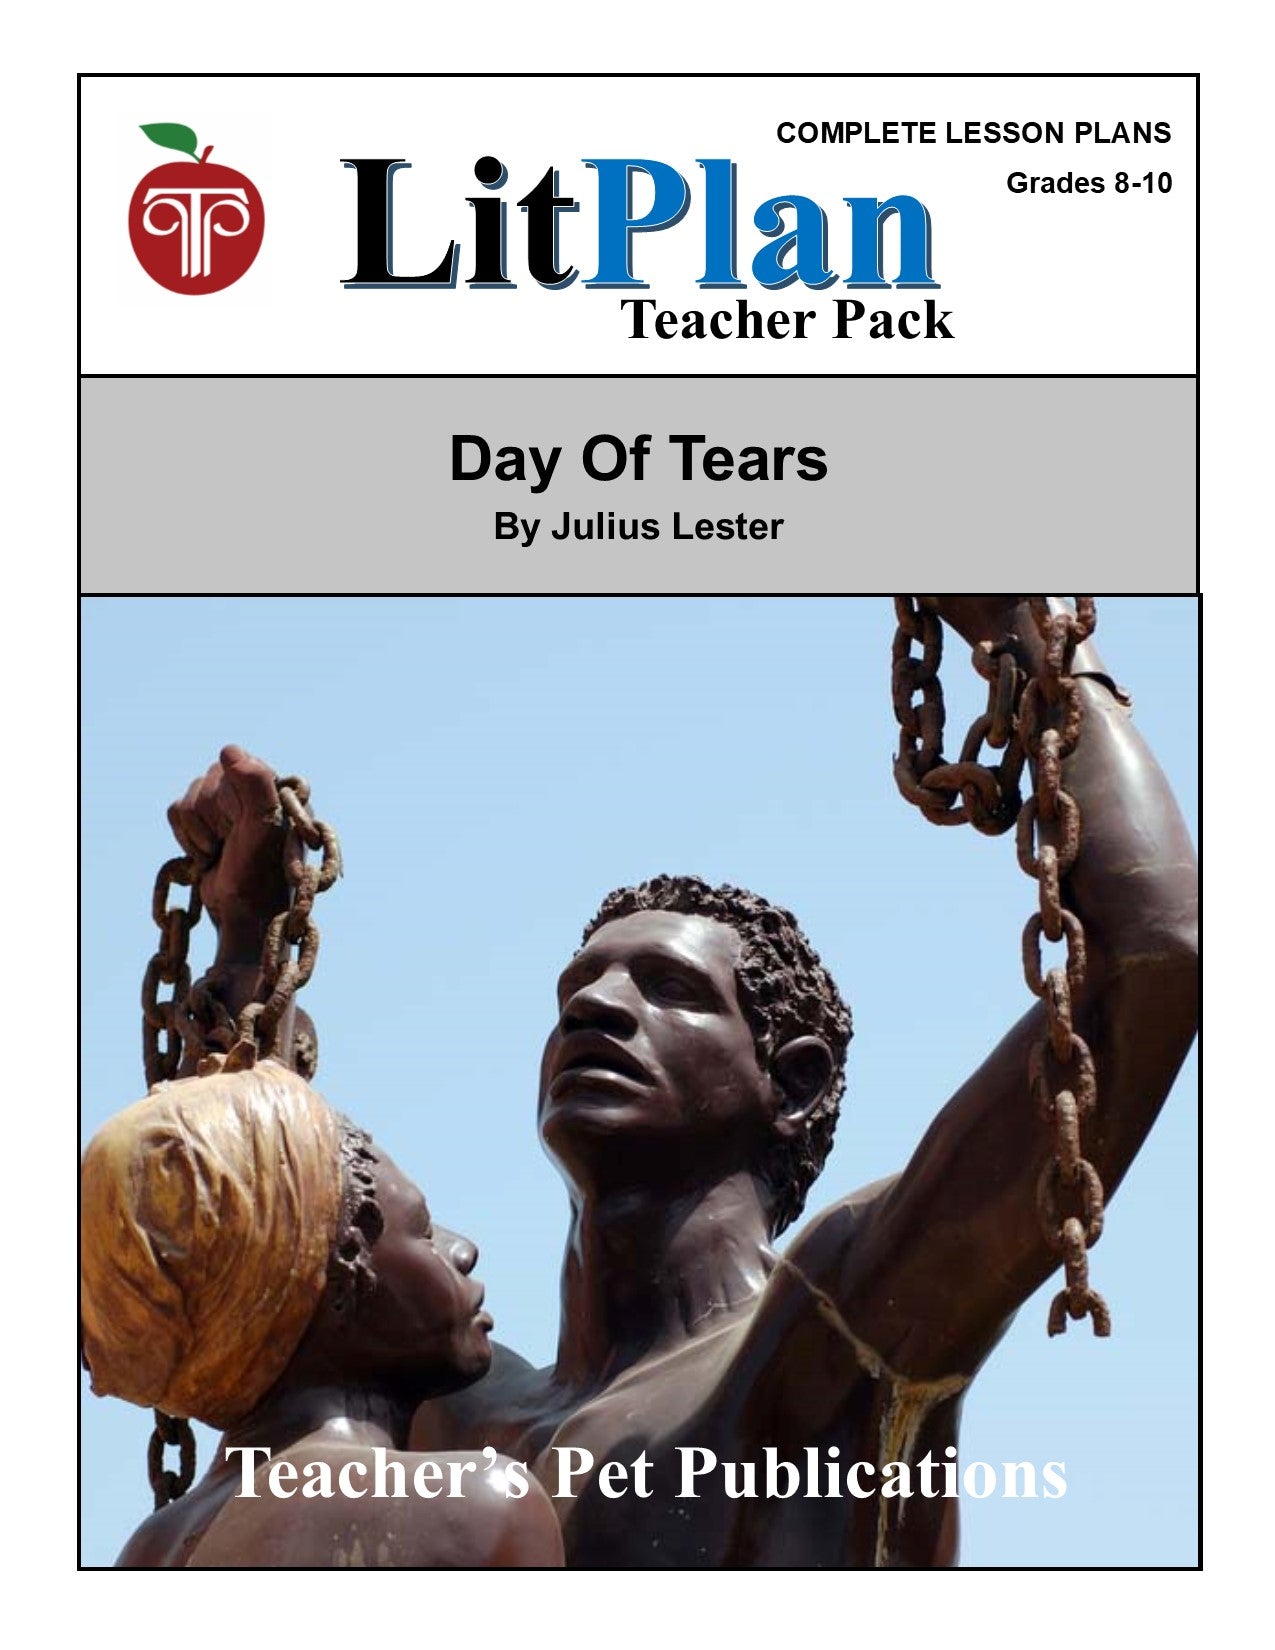 Day of Tears: LitPlan Teacher Pack Grades 8-10